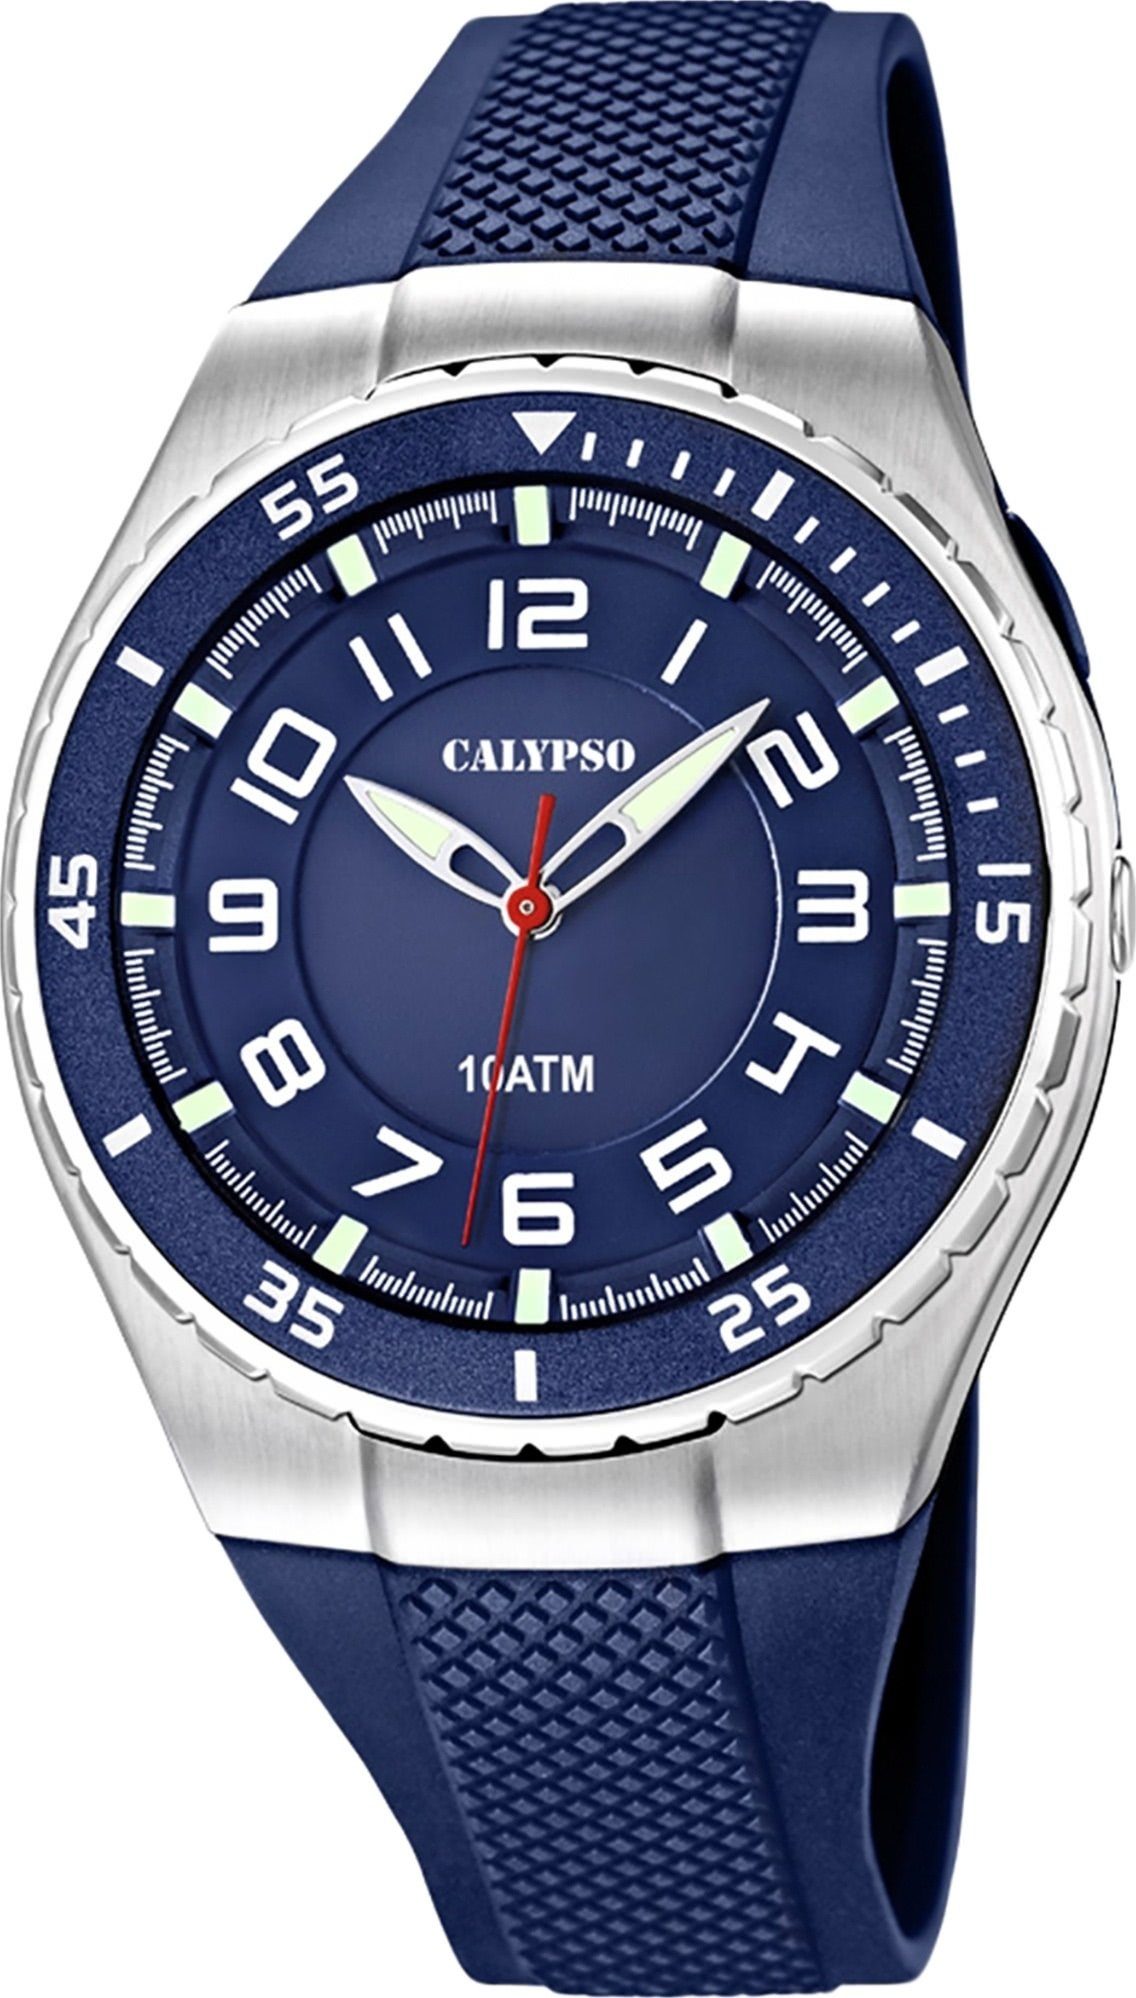 CALYPSO WATCHES Quarzuhr Calypso Uhr Armbanduhr Casual Casual Herren Silikon, Herren rund, blau, Silikonarmband K6063/2